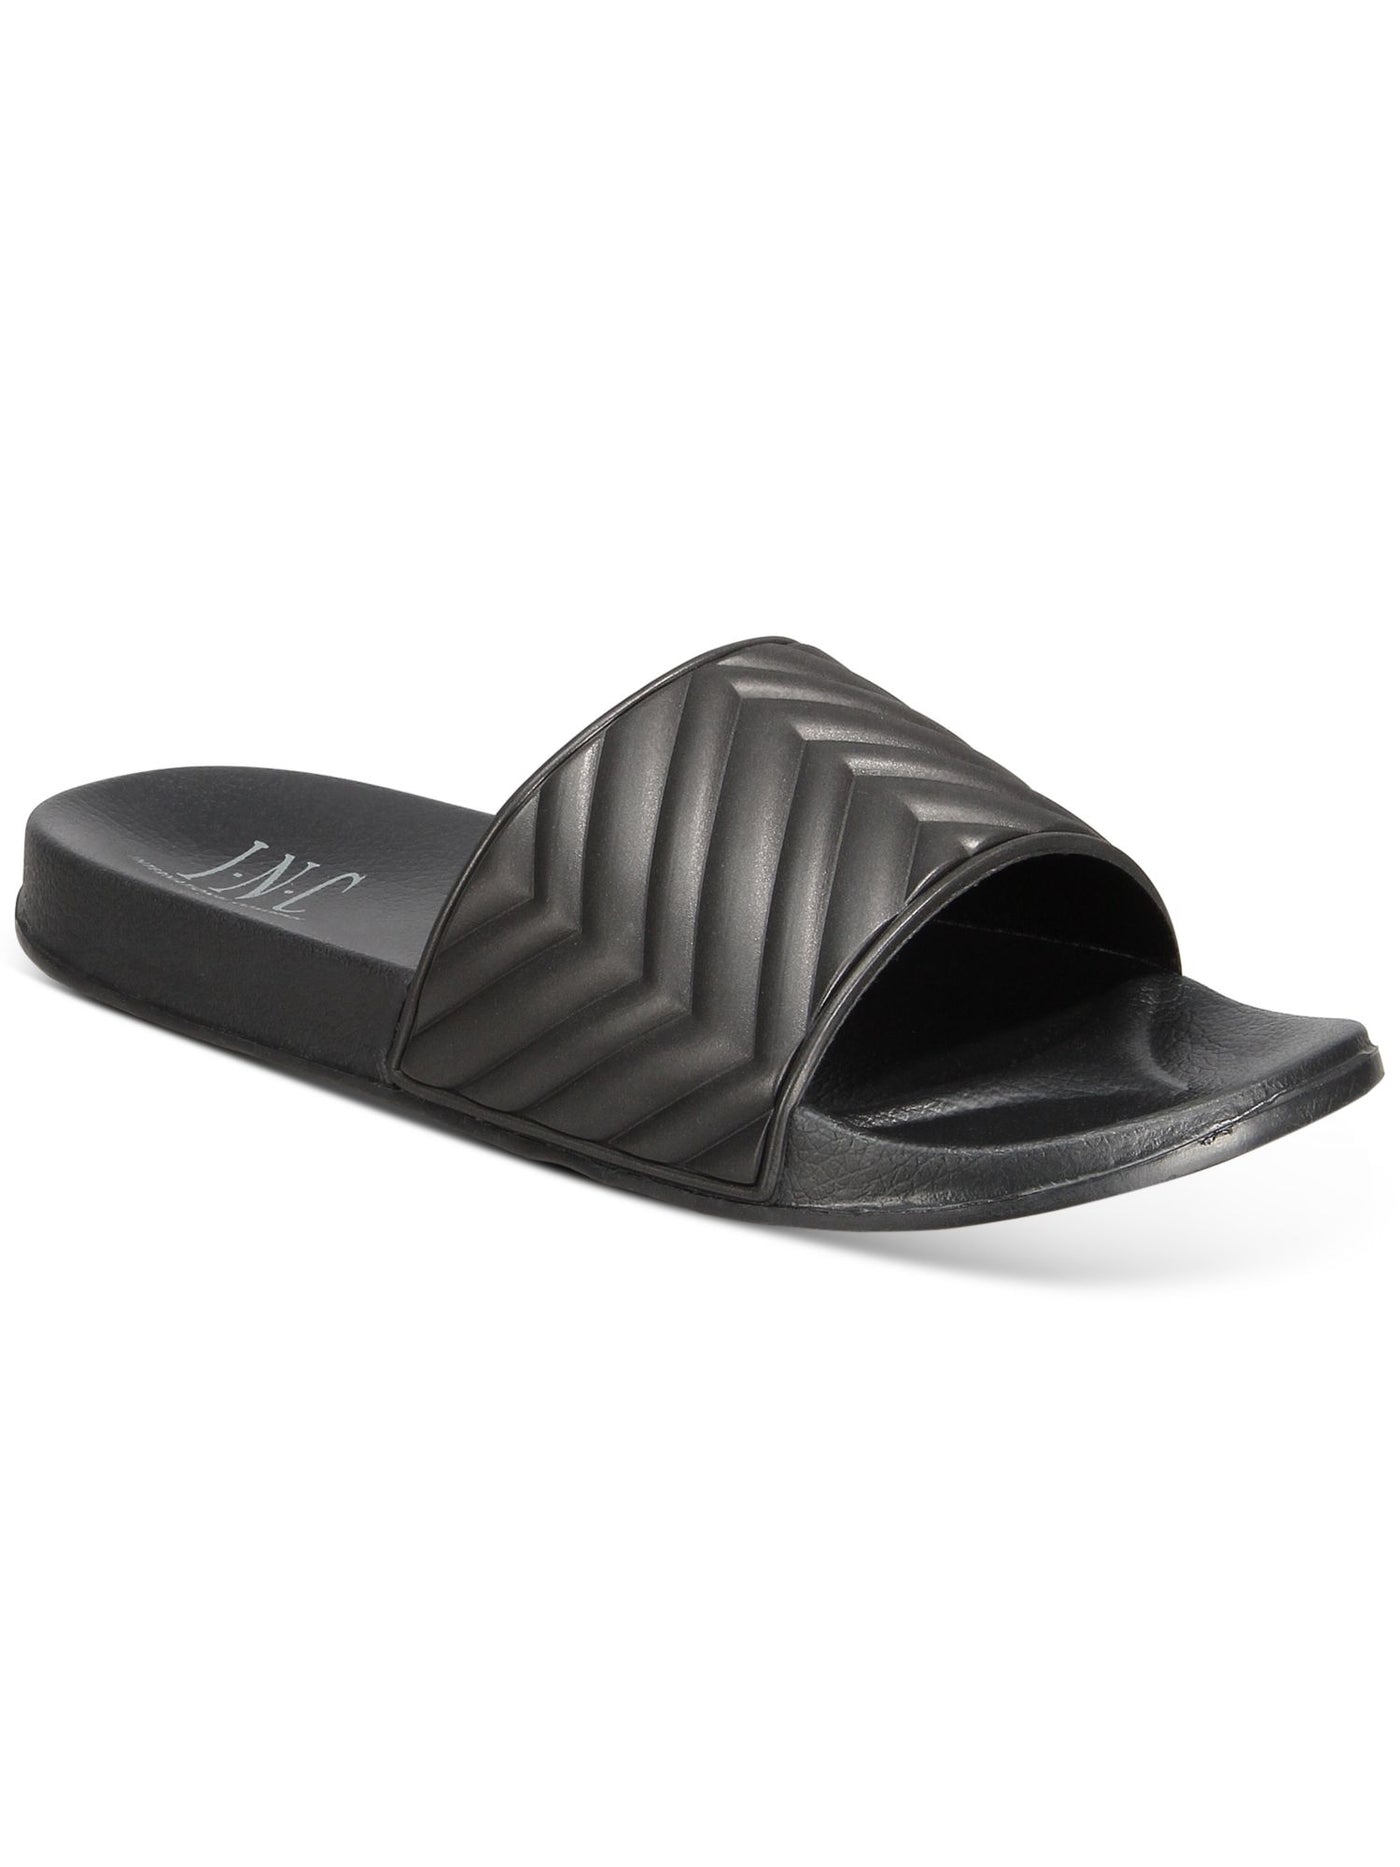 INC Mens Black Quilted Xander Open Toe Slip On Slide Sandals Shoes 9 M